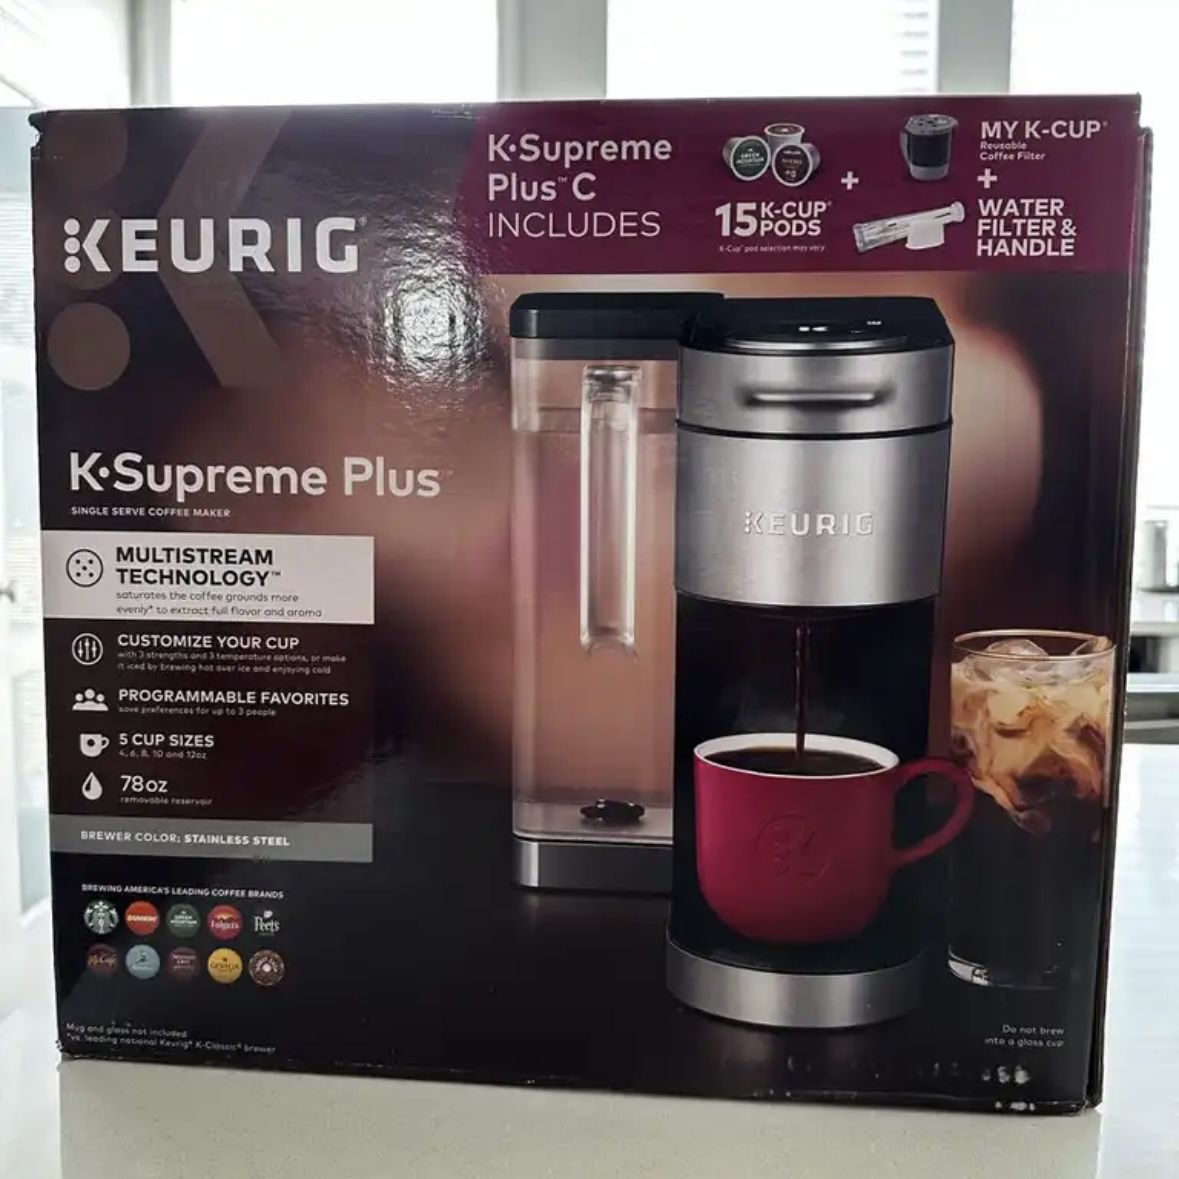 Keurig K-Supreme Plus C Single Serve Coffee Maker (BRAND NEW)